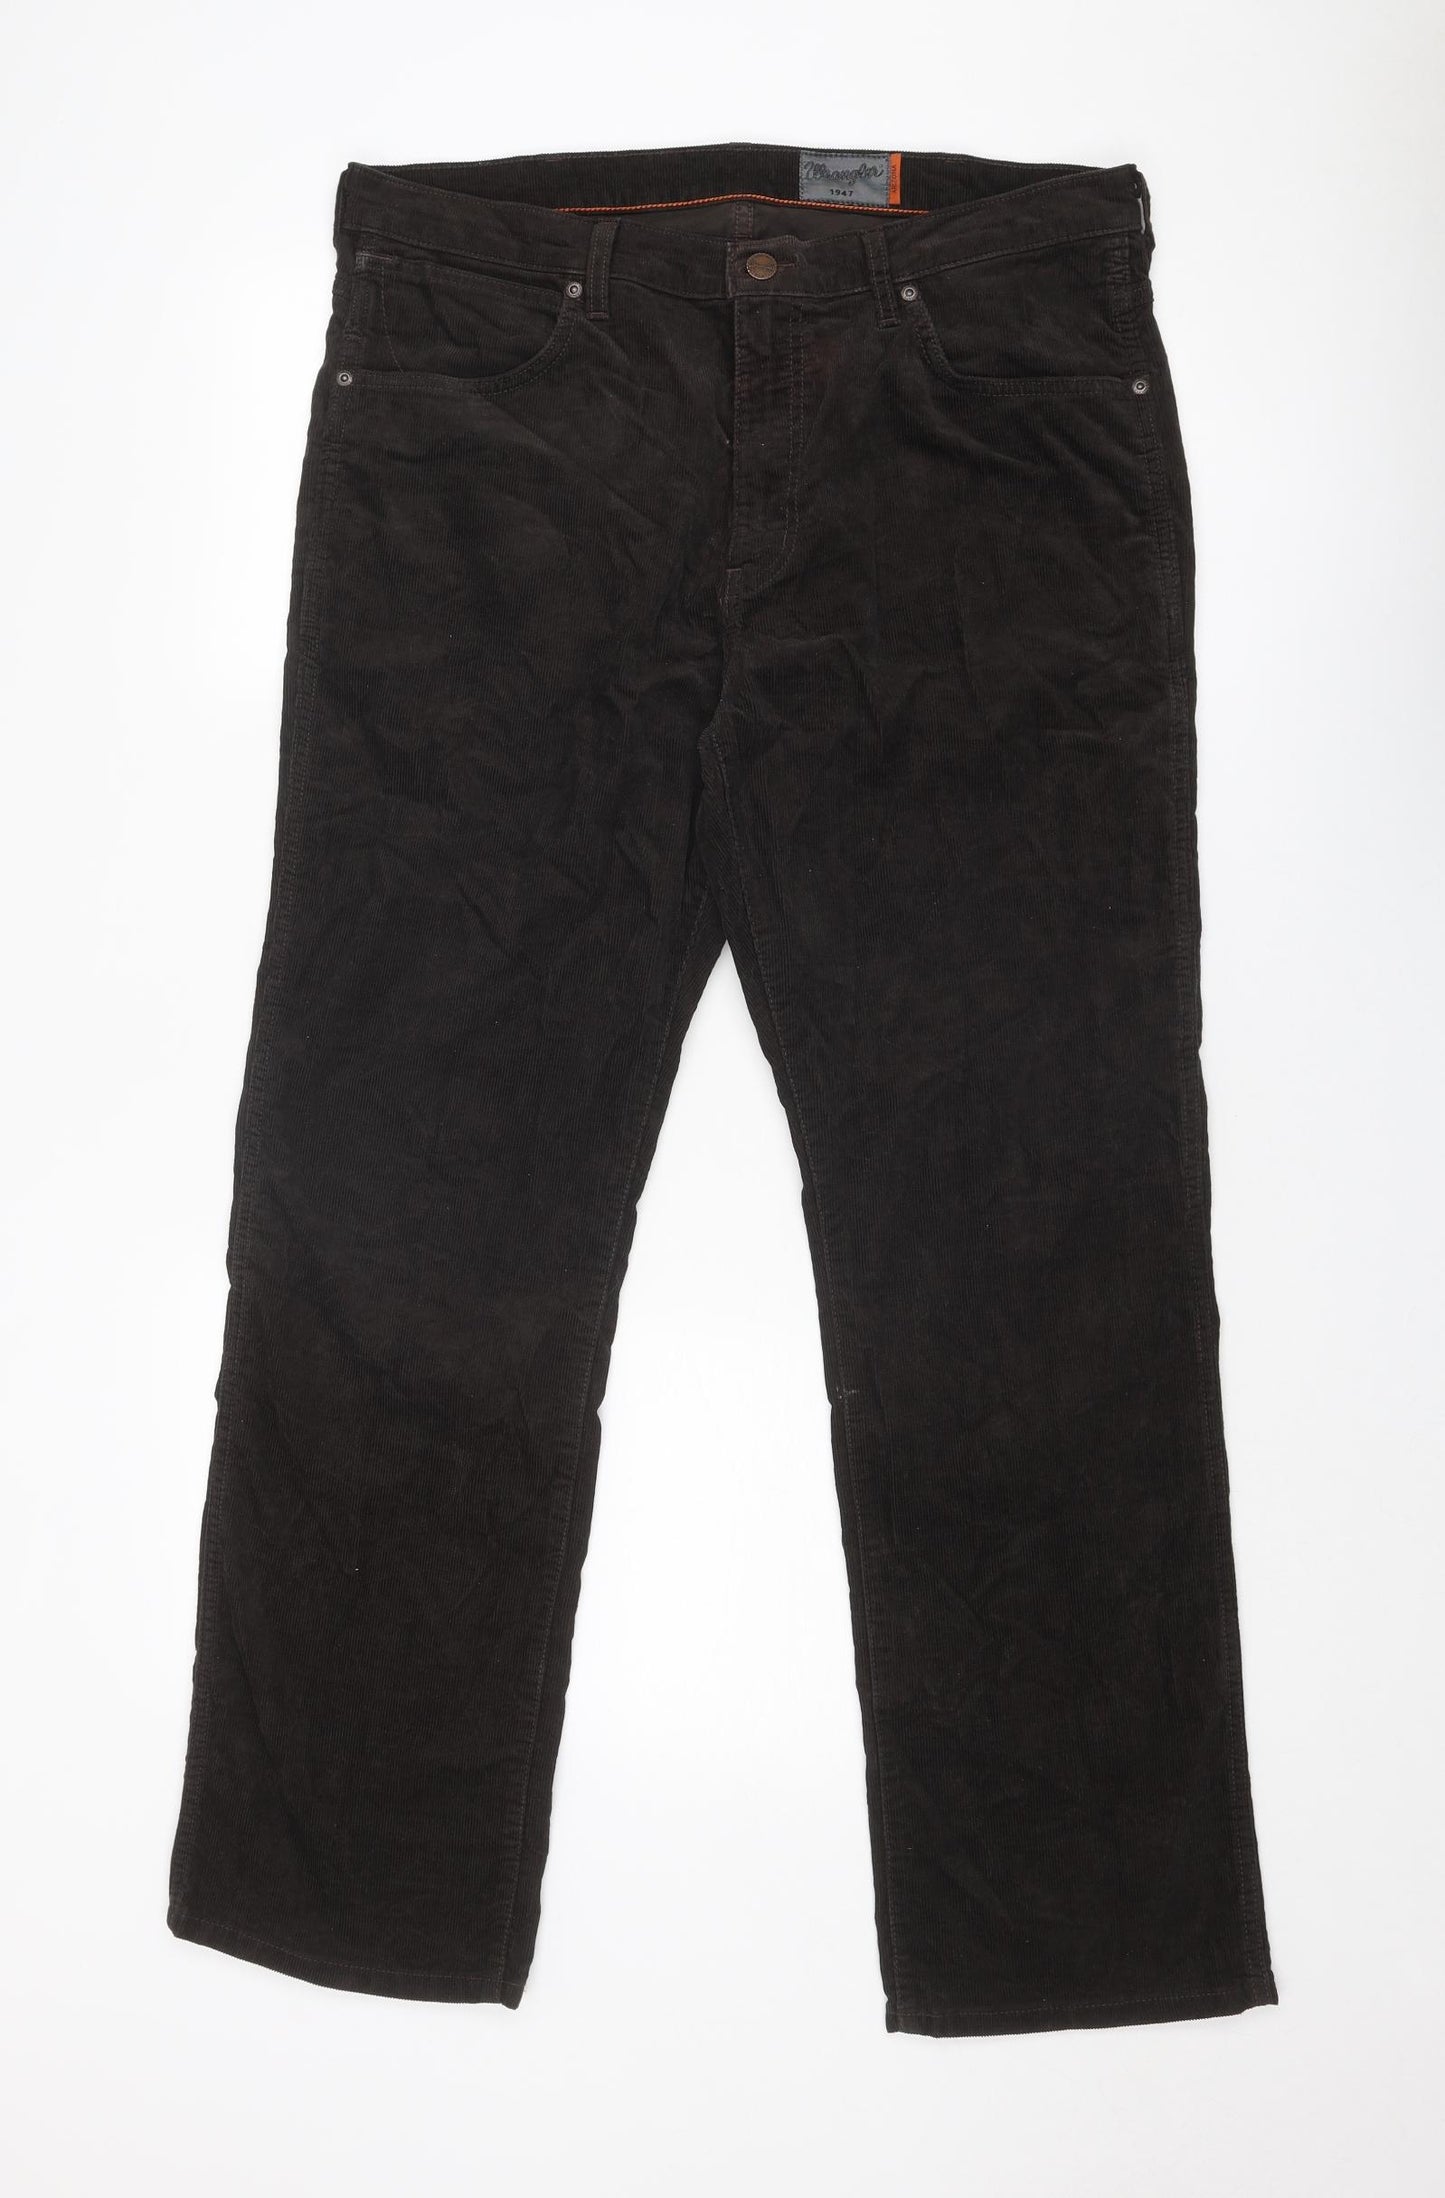 Wrangler Mens Brown Cotton Snow Pants Trousers Size 36 in Regular Zip